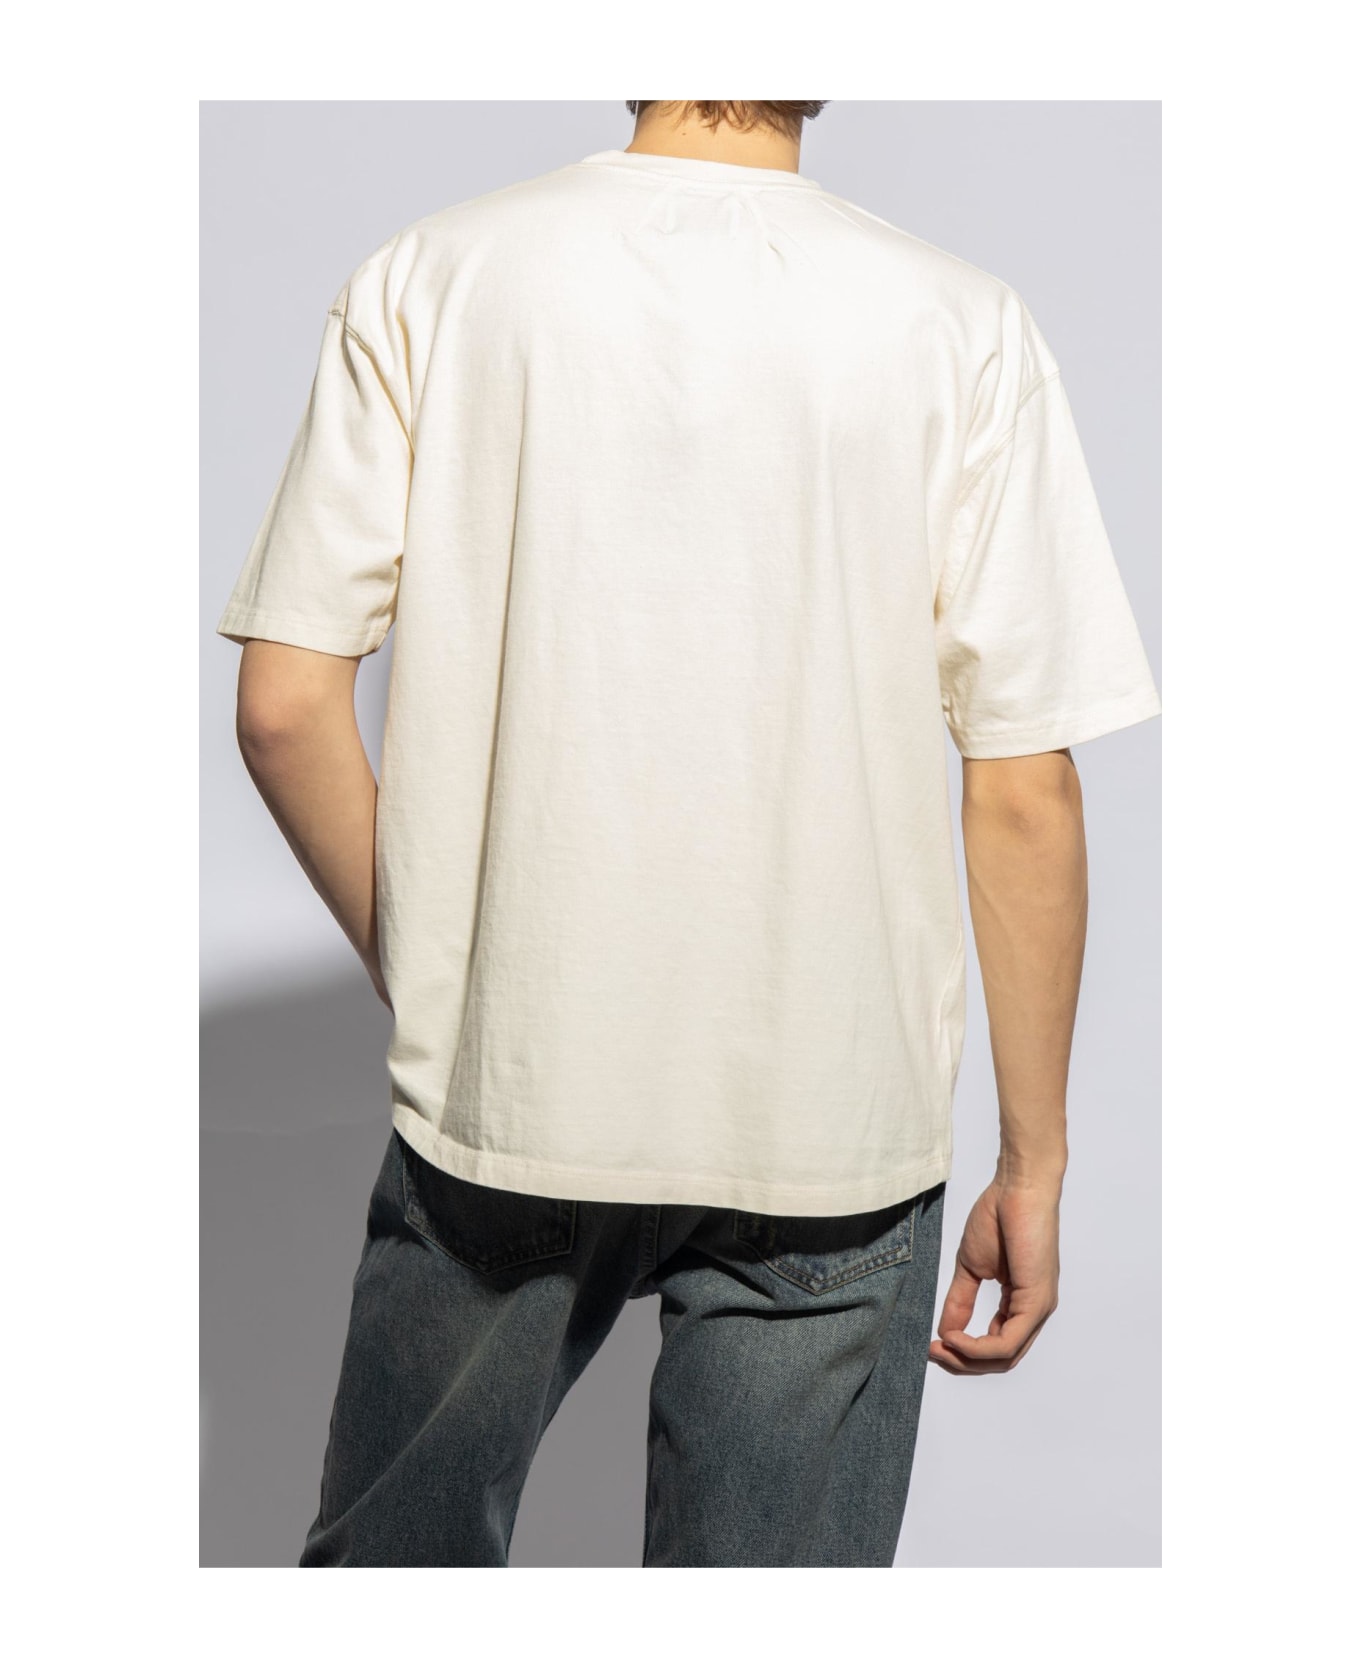 Rhude Cotton T-shirt - White